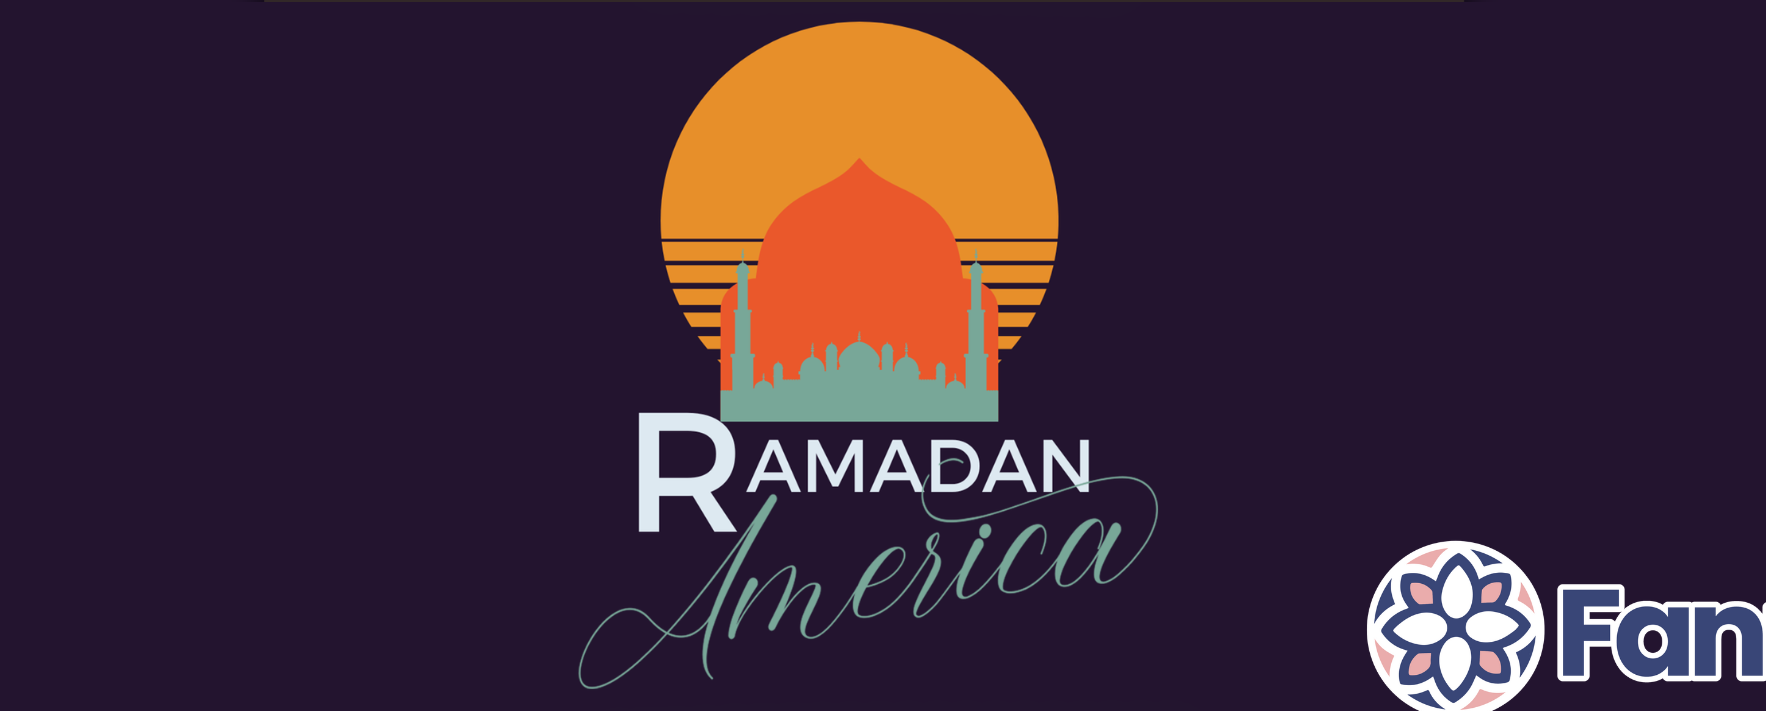 Groundbreaking Film “Ramadan America” to Showcase at Muslim House in Austin